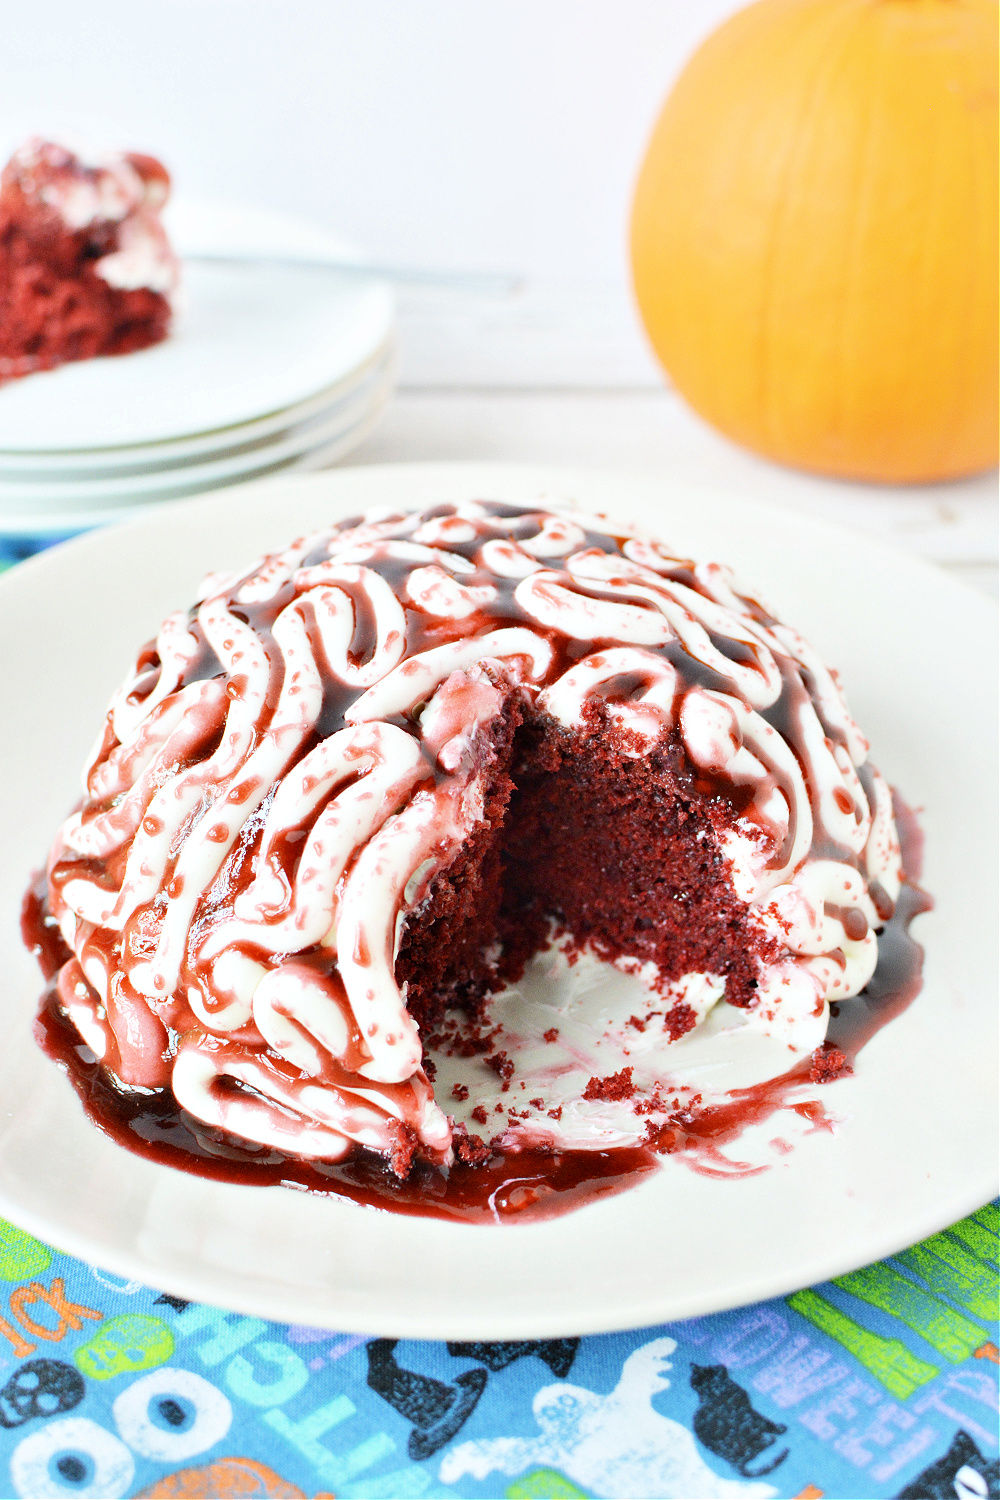 A Spooky Fun Halloween Brain Cake Recipe